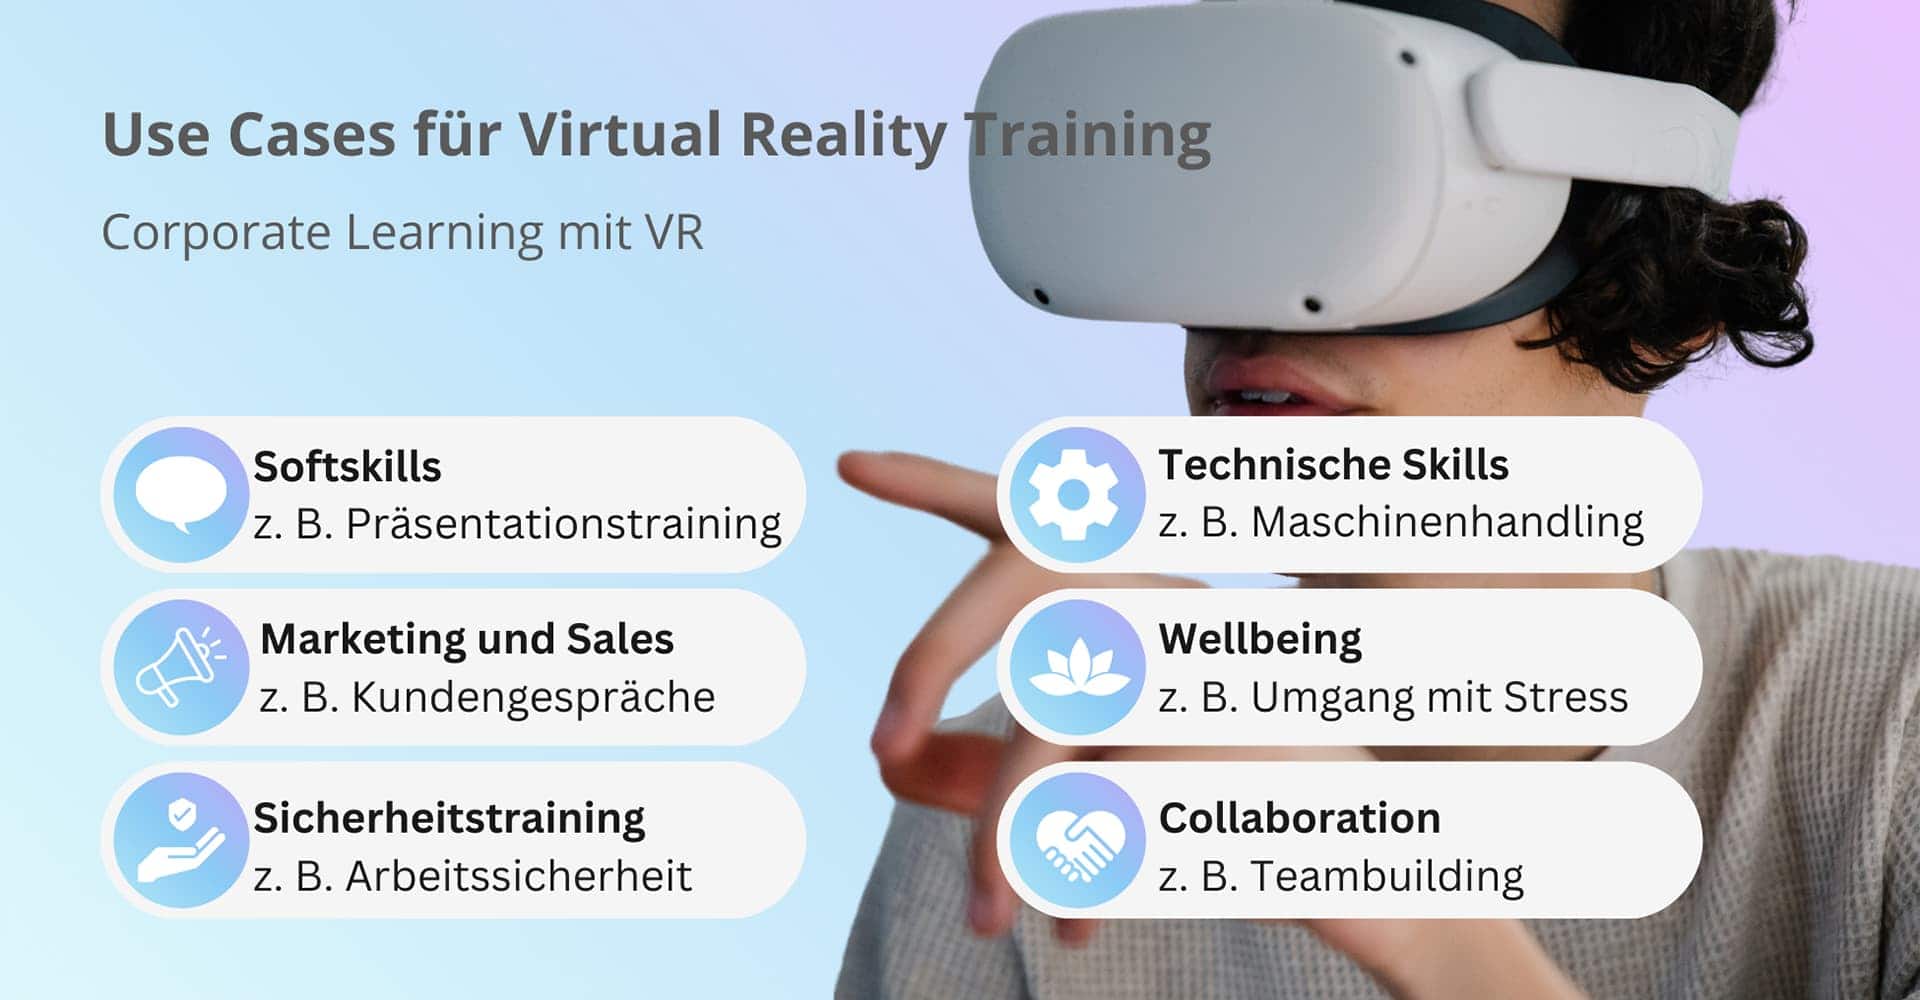 Use Cases für Virtual Reality Training